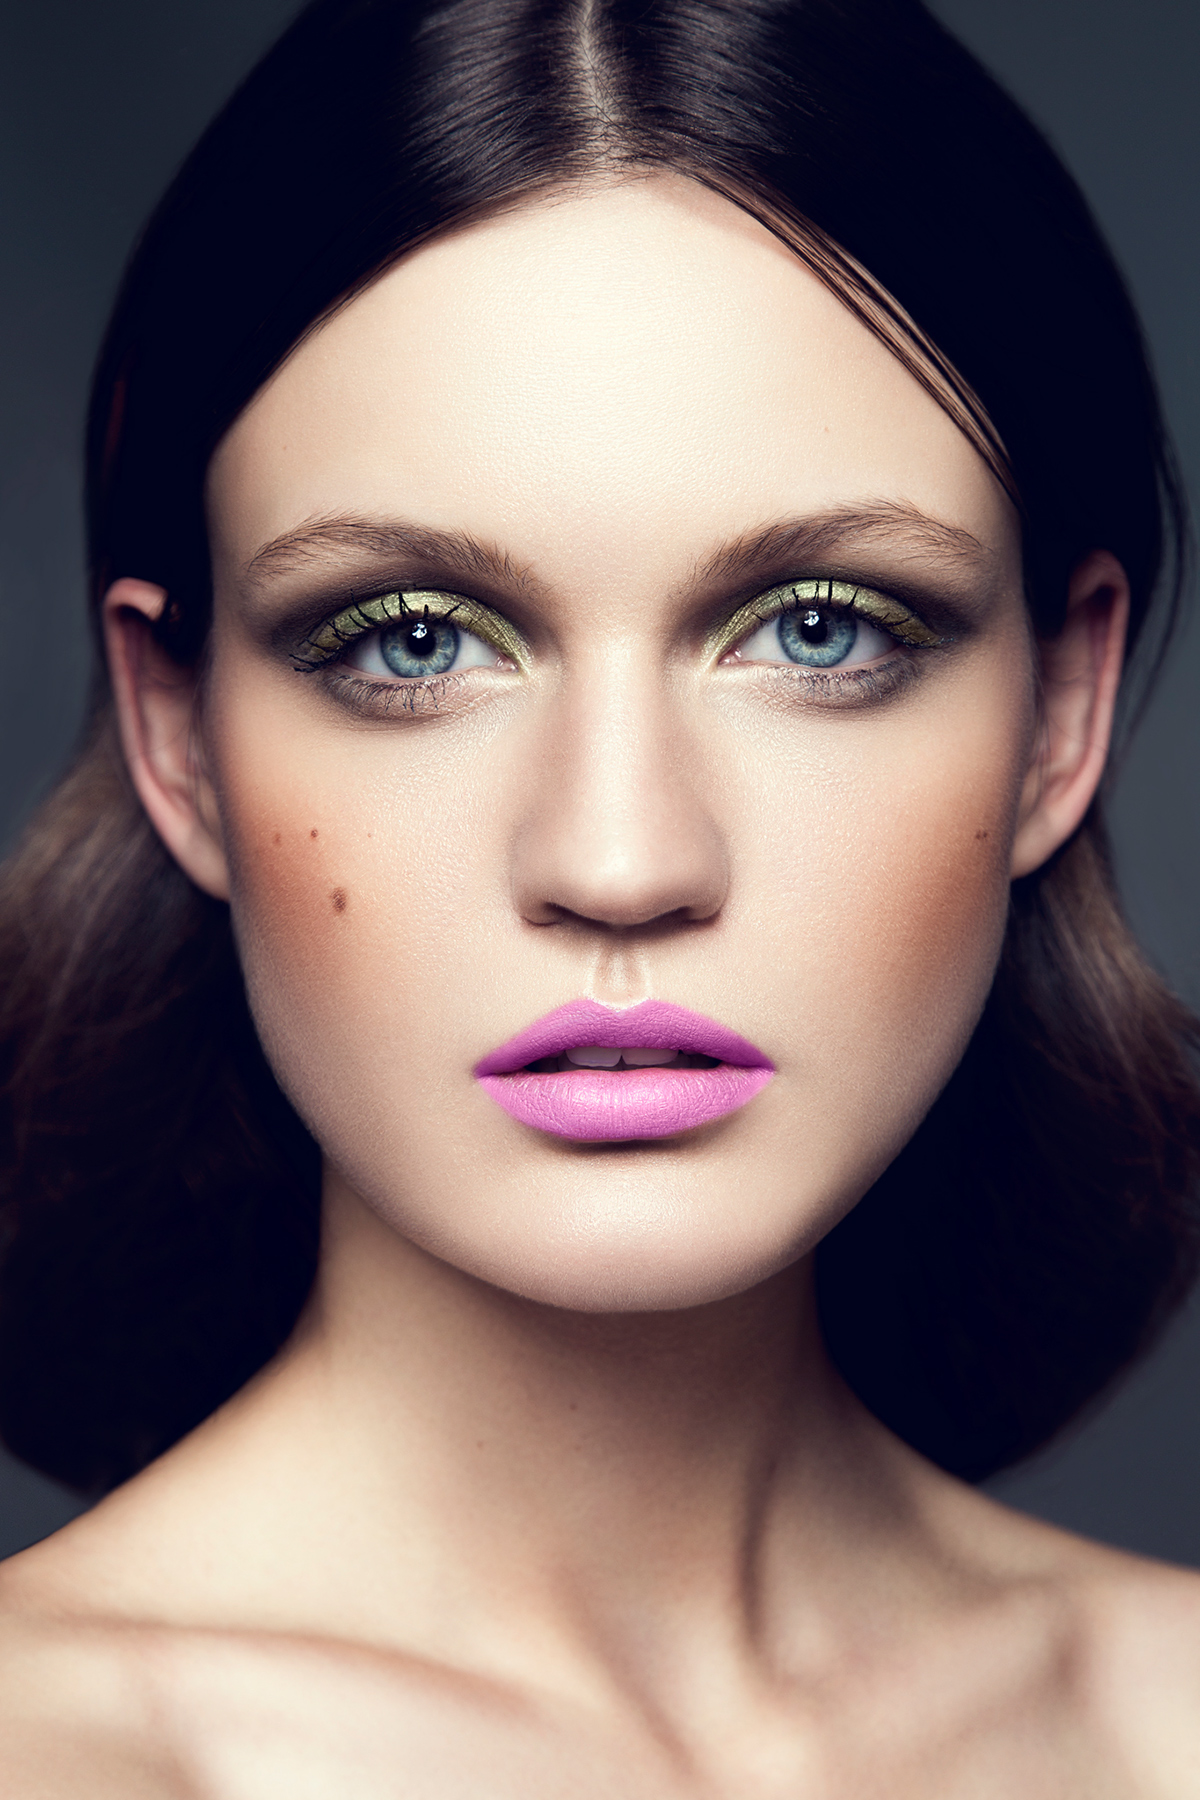 highendretouch skinretouch makeup colors Beautiful model Cosmopolitan magazine